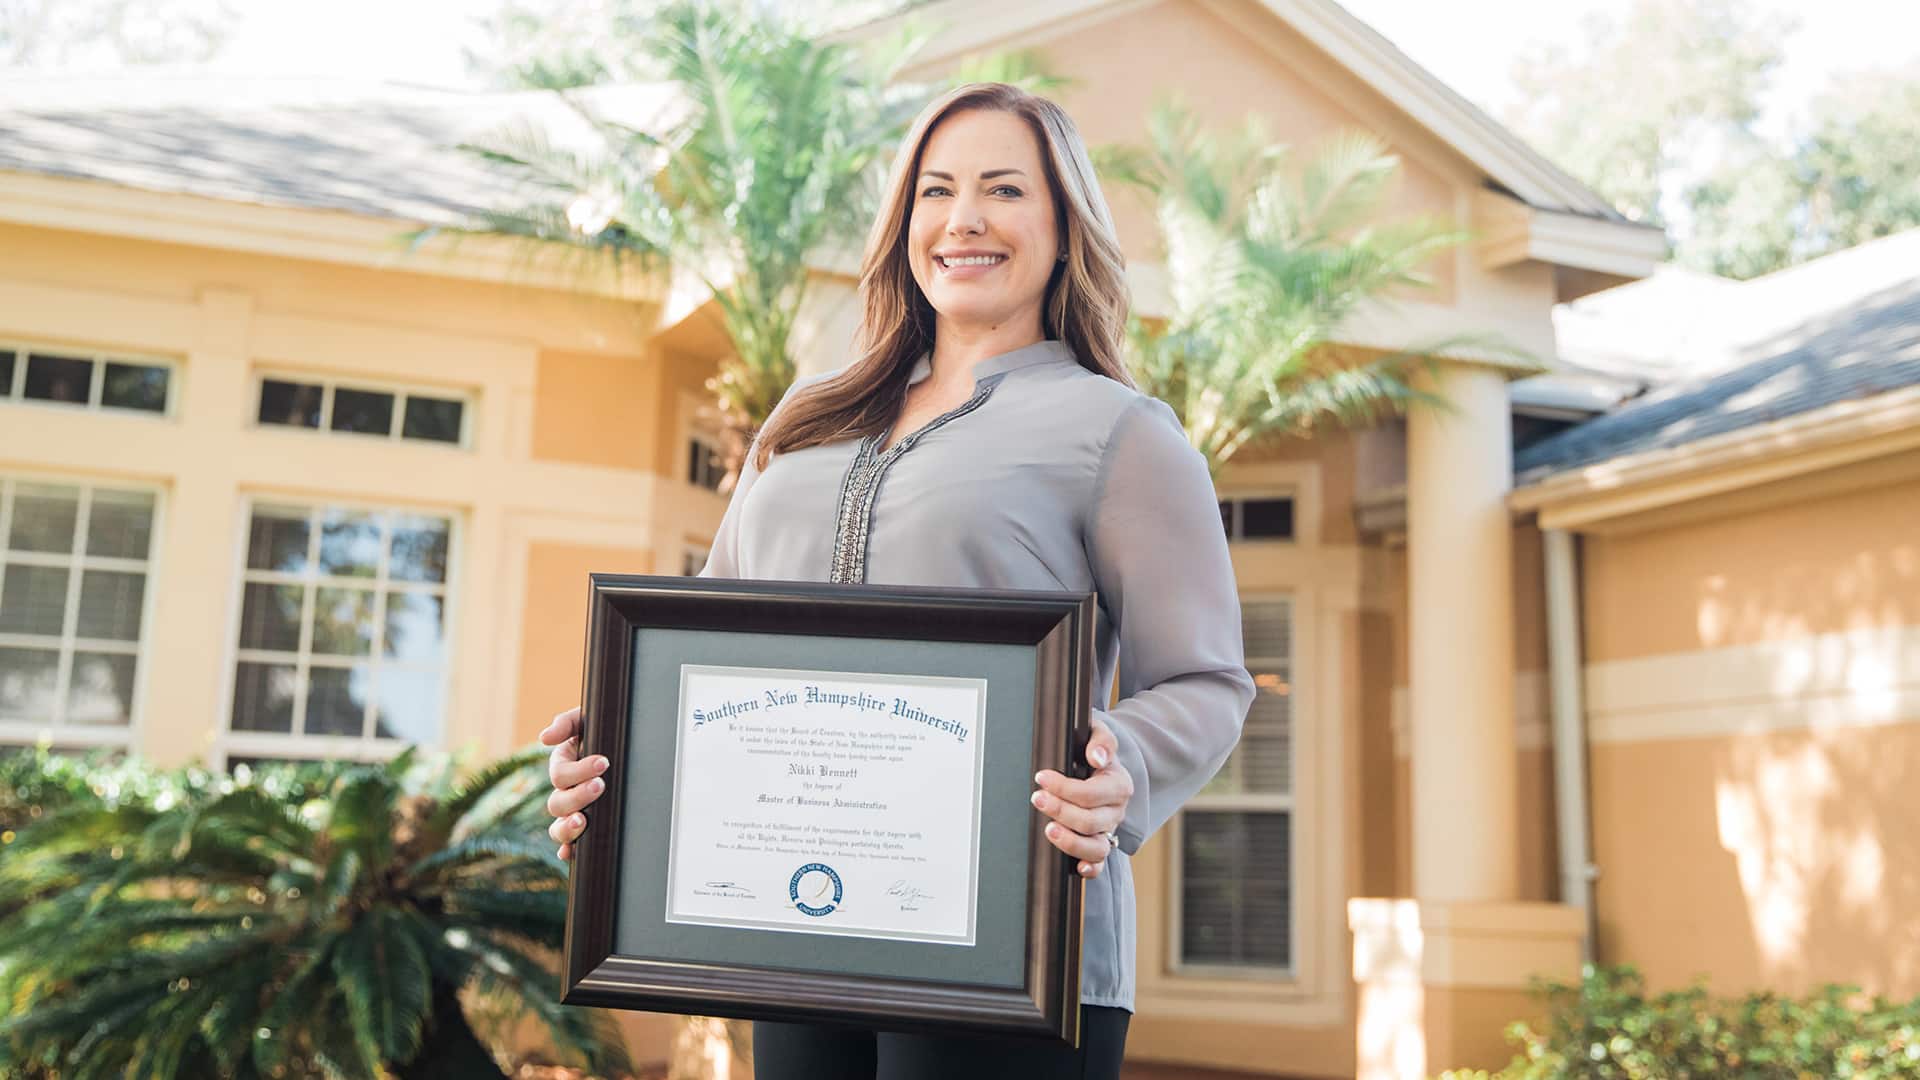 Nikki Bennett, who earned her dgree at SNHU, standing in her front yard holding her framed SNHU diploma